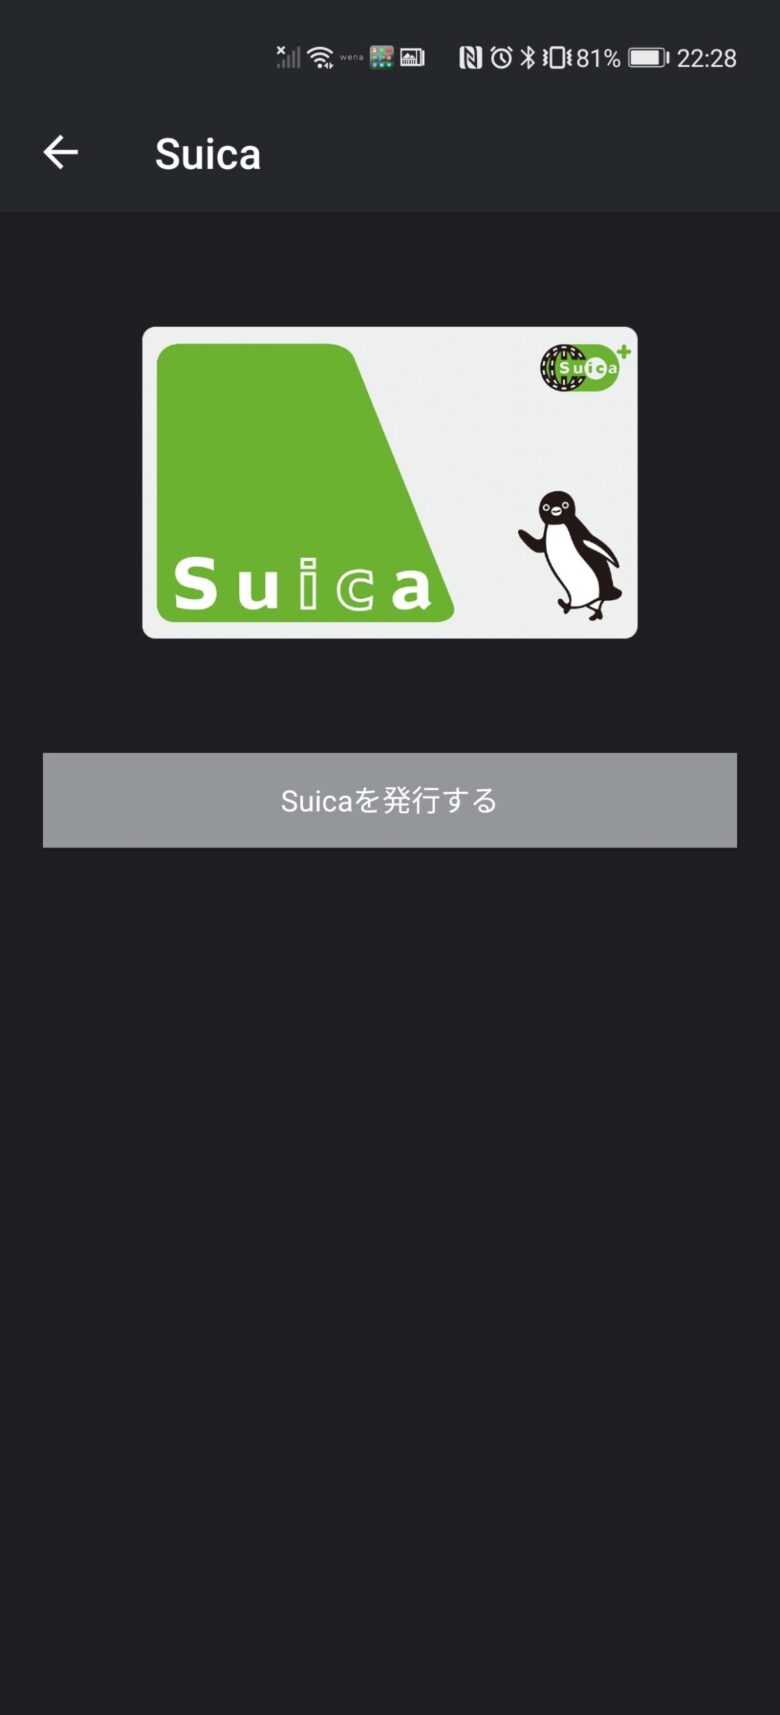 wena 3アプリのSuica発行画面です。